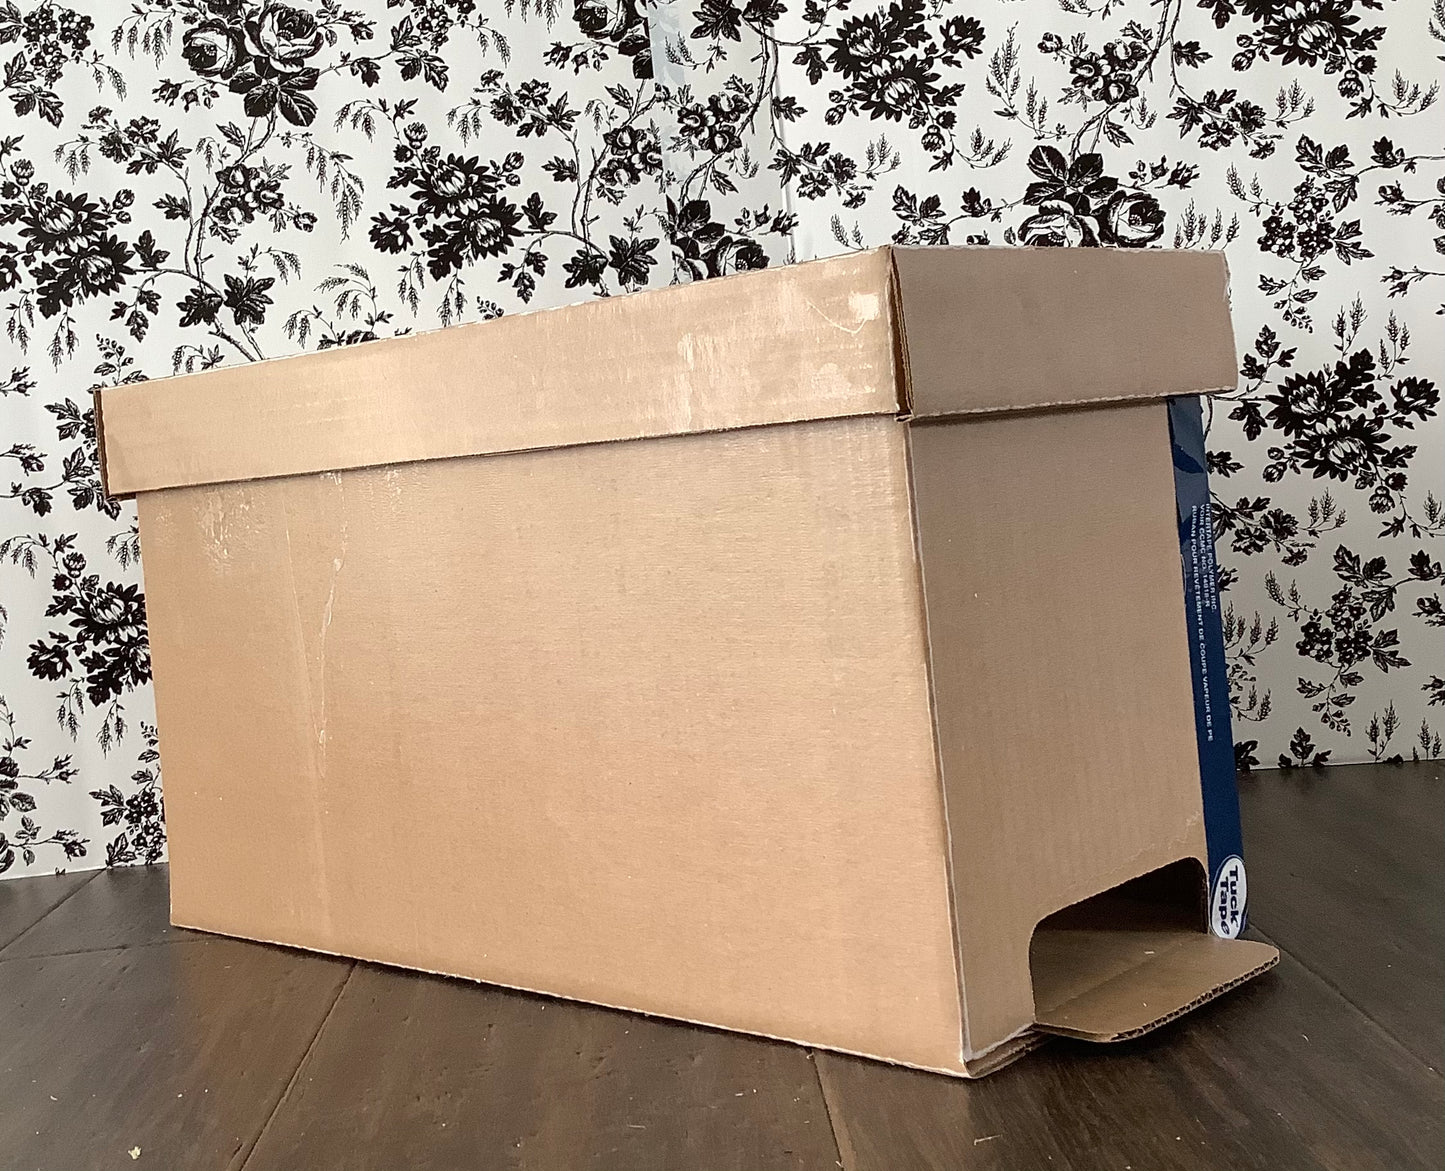 Nuc Boxes-Wax Dipped Cardboard